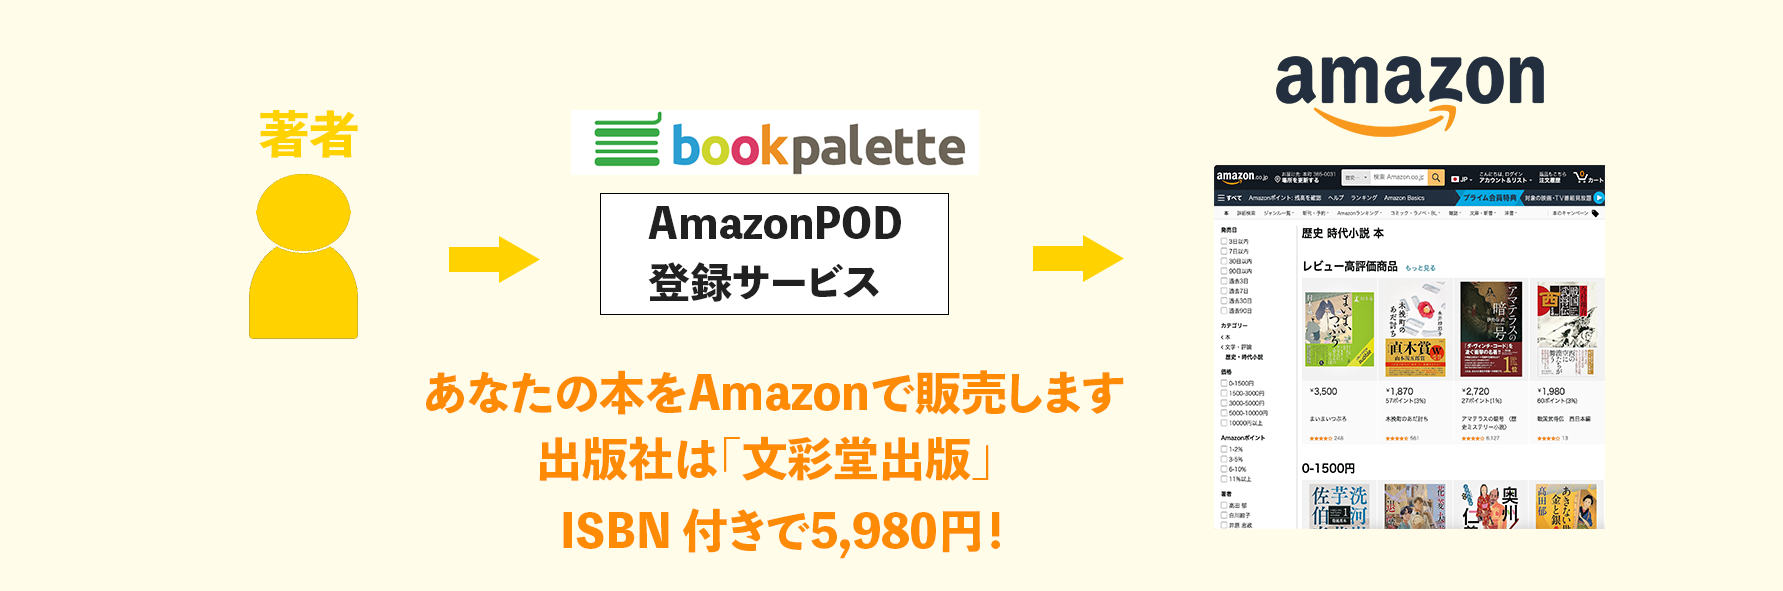 AmazonPOD(プリント・オン・デマンド)